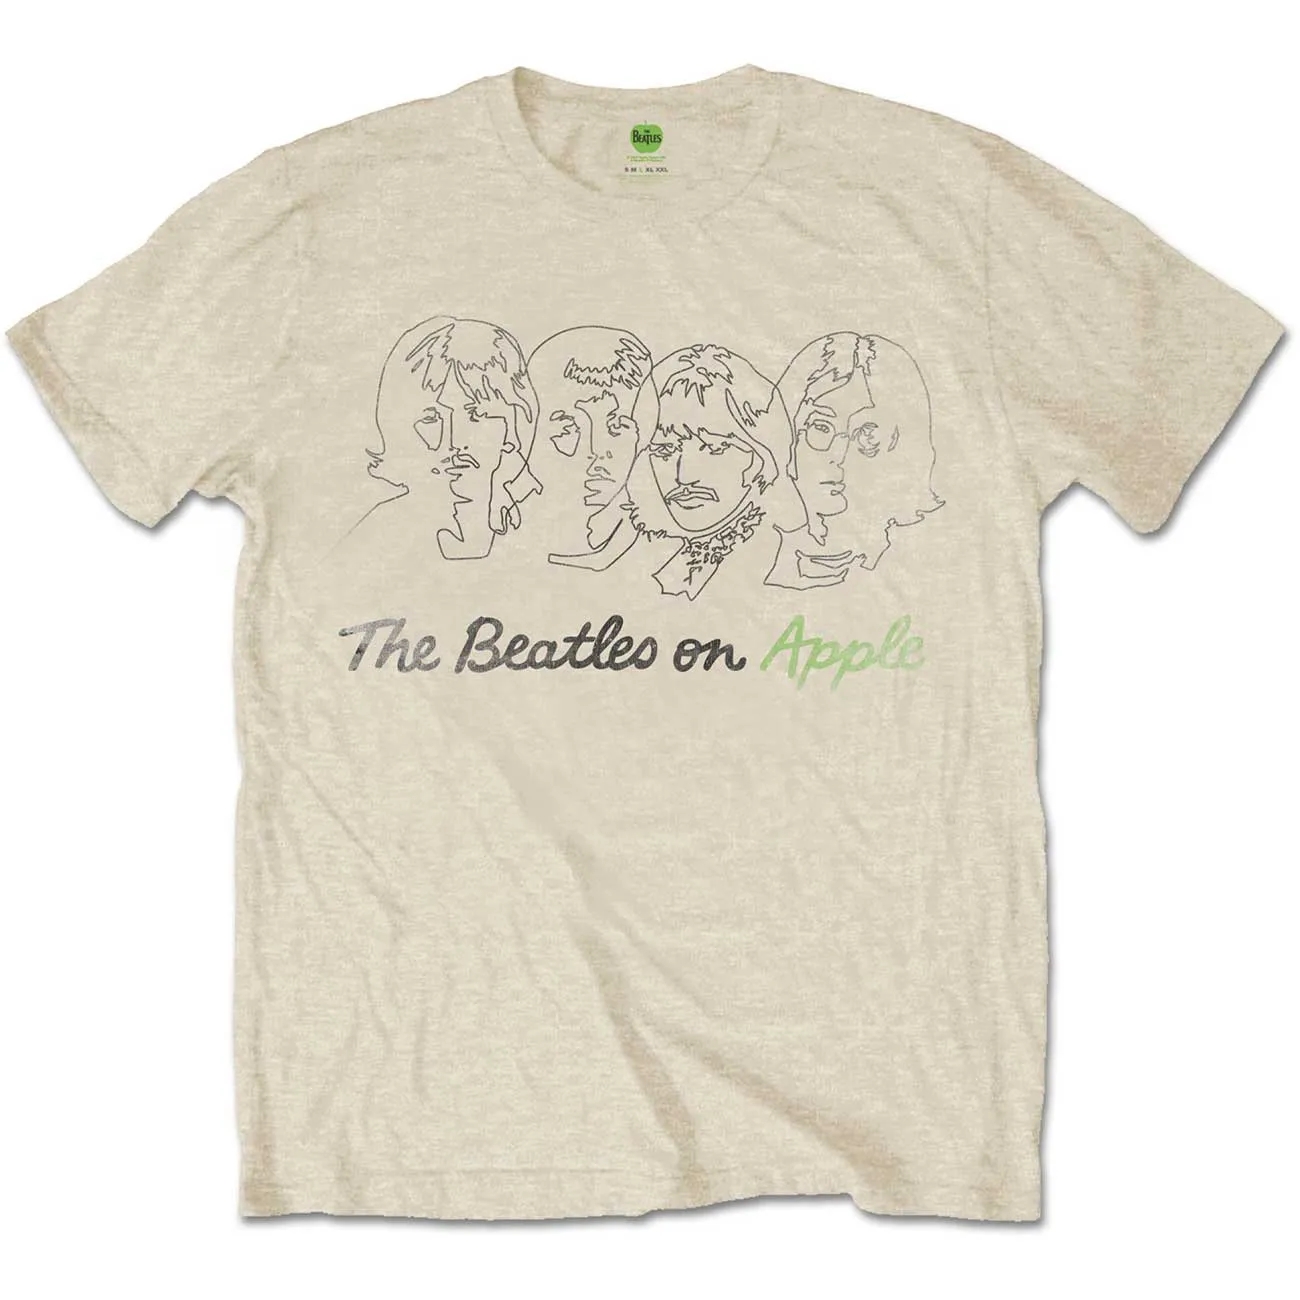 The Beatles - Unisex T-Shirt Outline Faces on Apple artwork